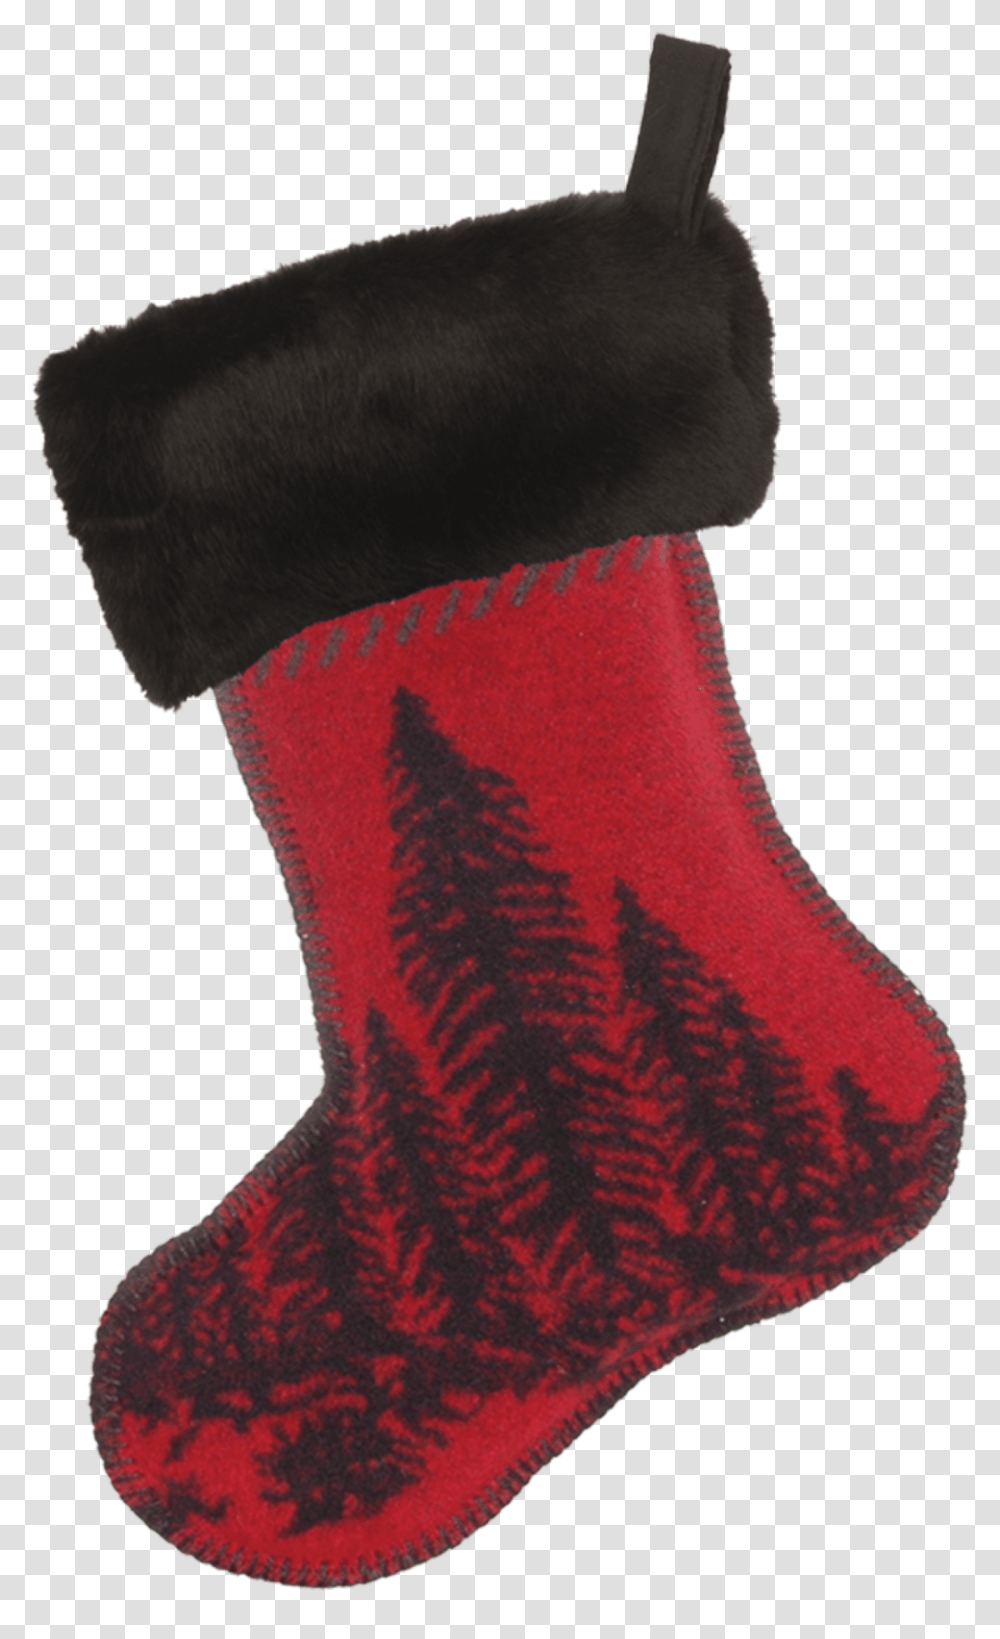 Sock, Stocking, Christmas Stocking, Gift Transparent Png